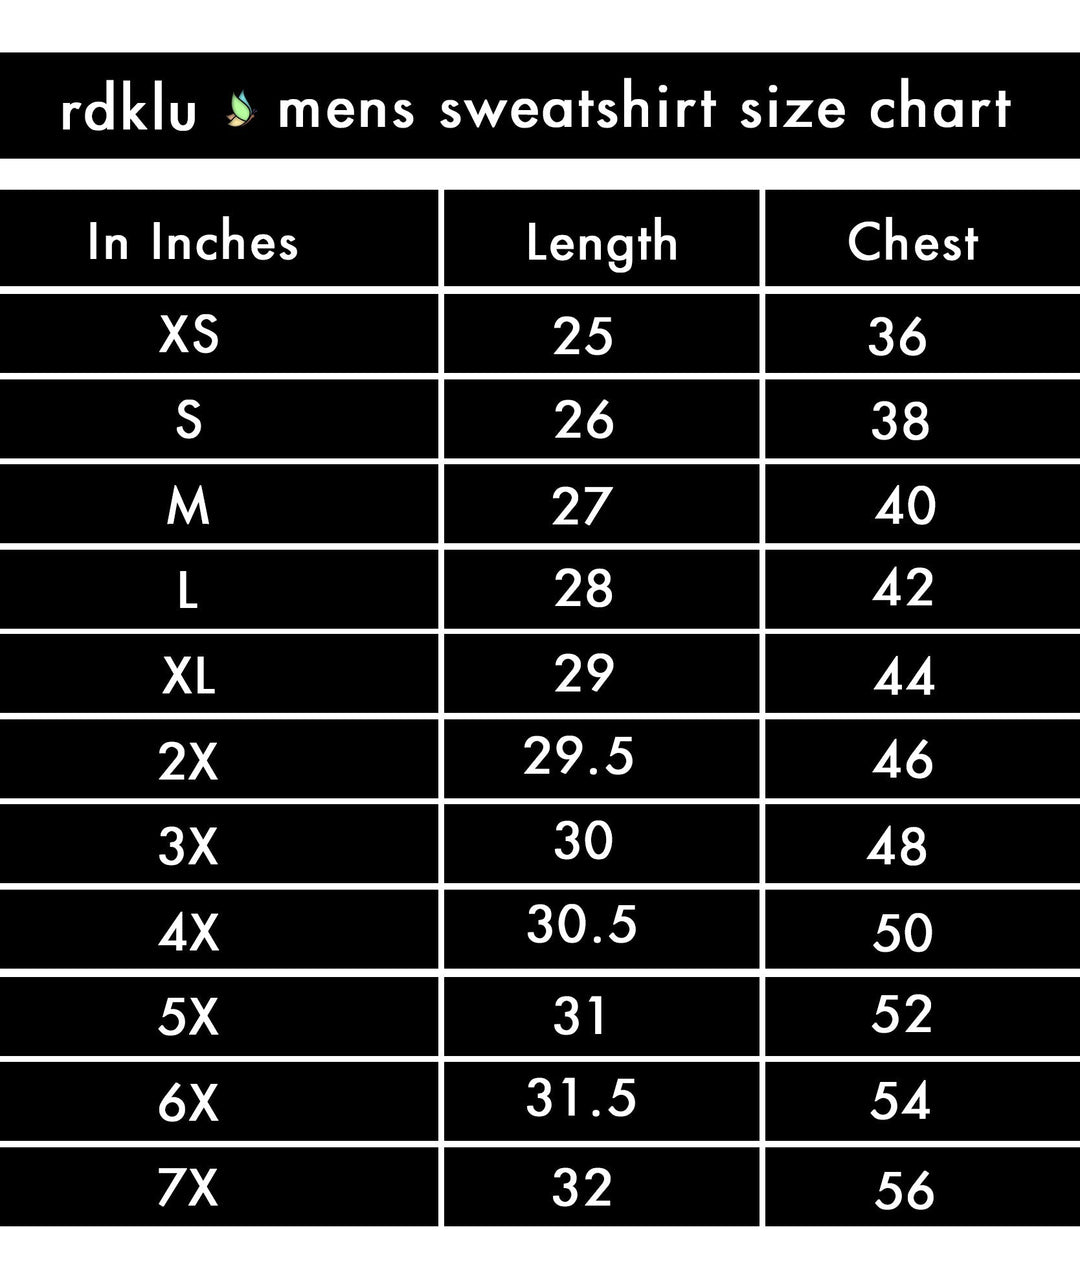 RDKLU MENS SWEATSHIRT - RDKL-Men's Sweatshirt#164